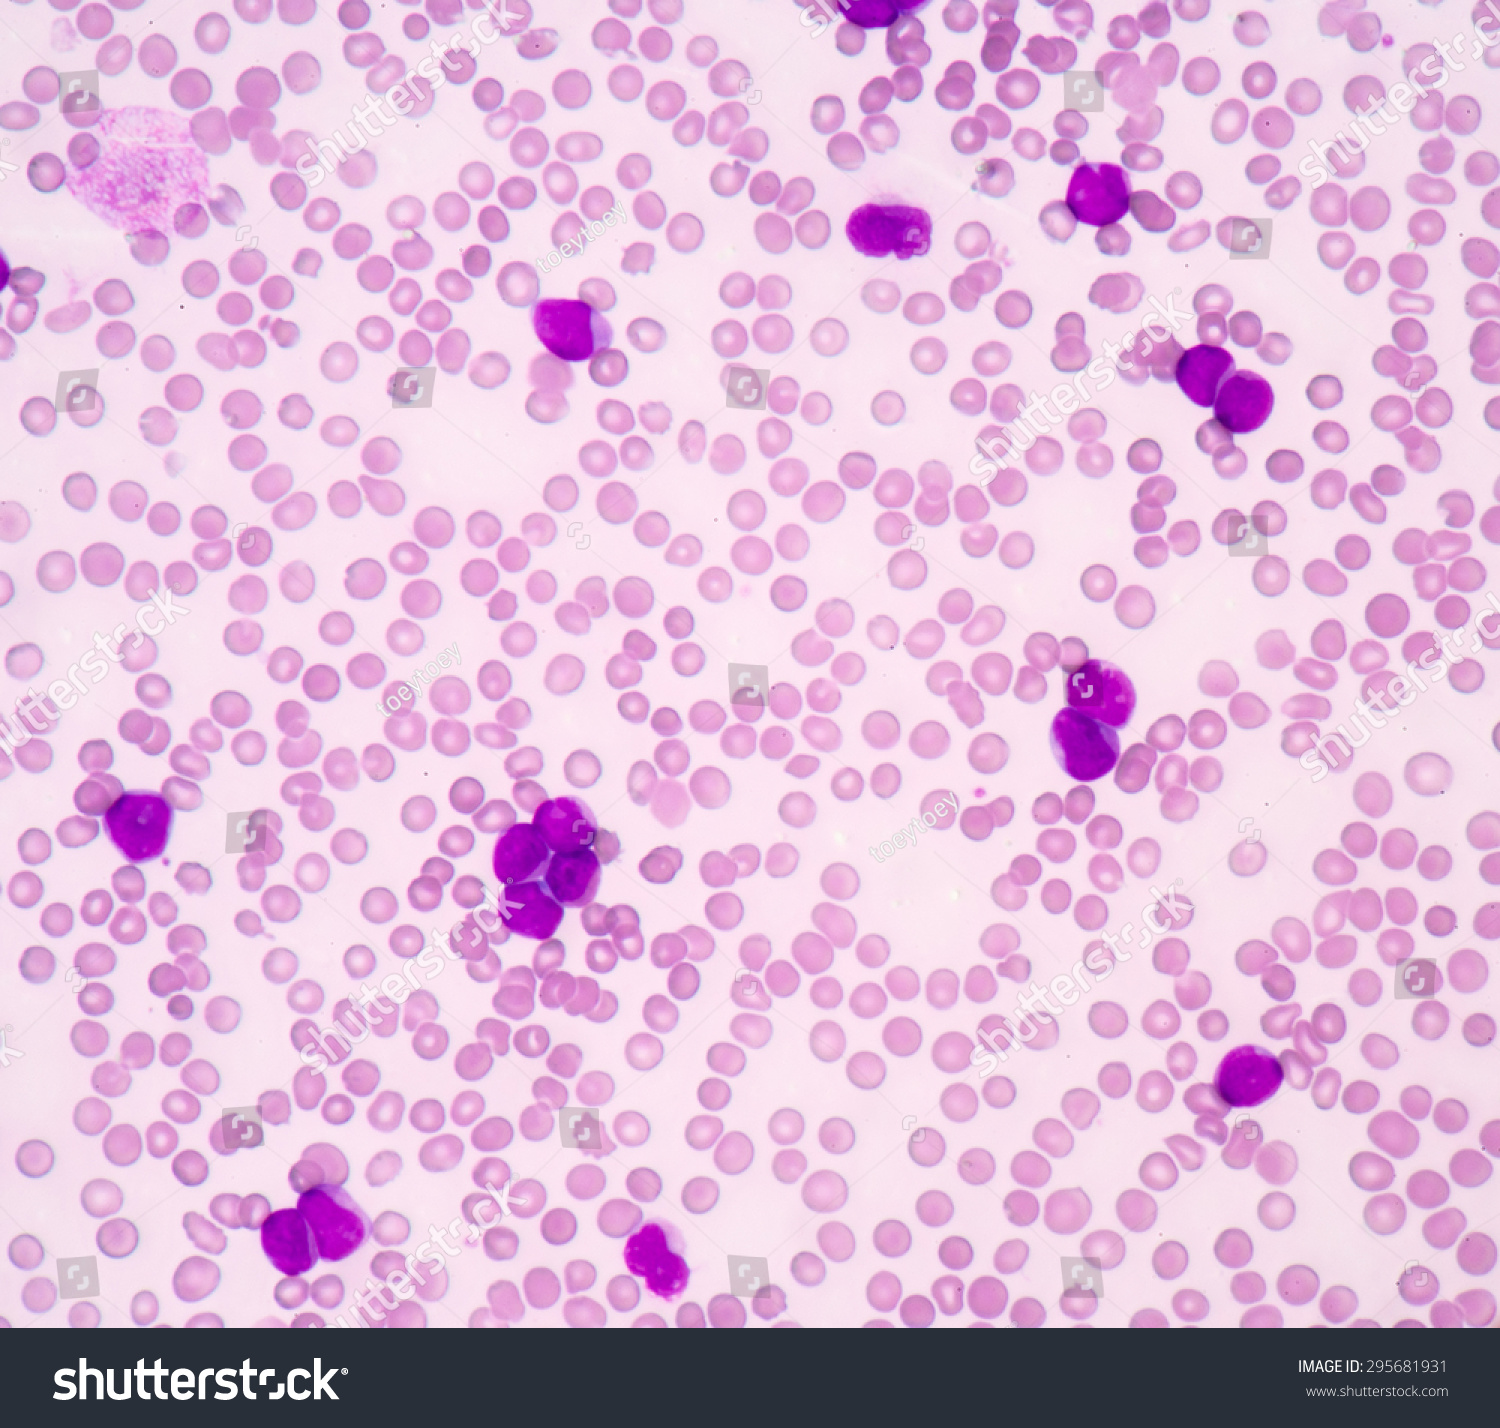 Blood Smear Show Acute Myeloblastic Leukemia(Aml).The Smear Shows Large ...